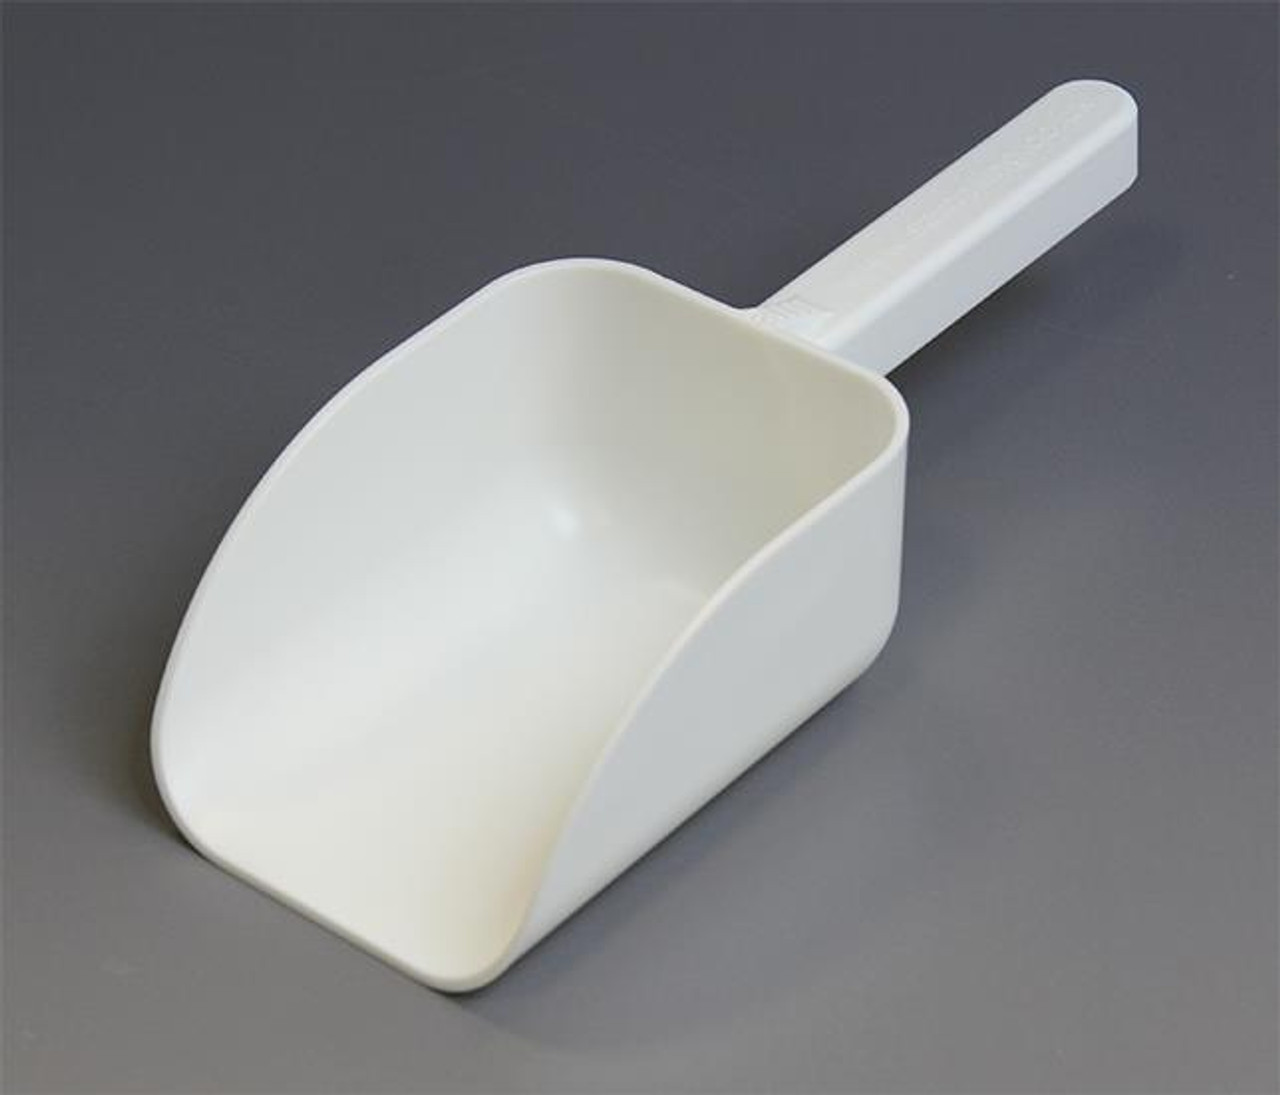 Description: Disposable Pharmaceutical Scoop – 500 ml 
High Impact Polystyrene White
Case 100